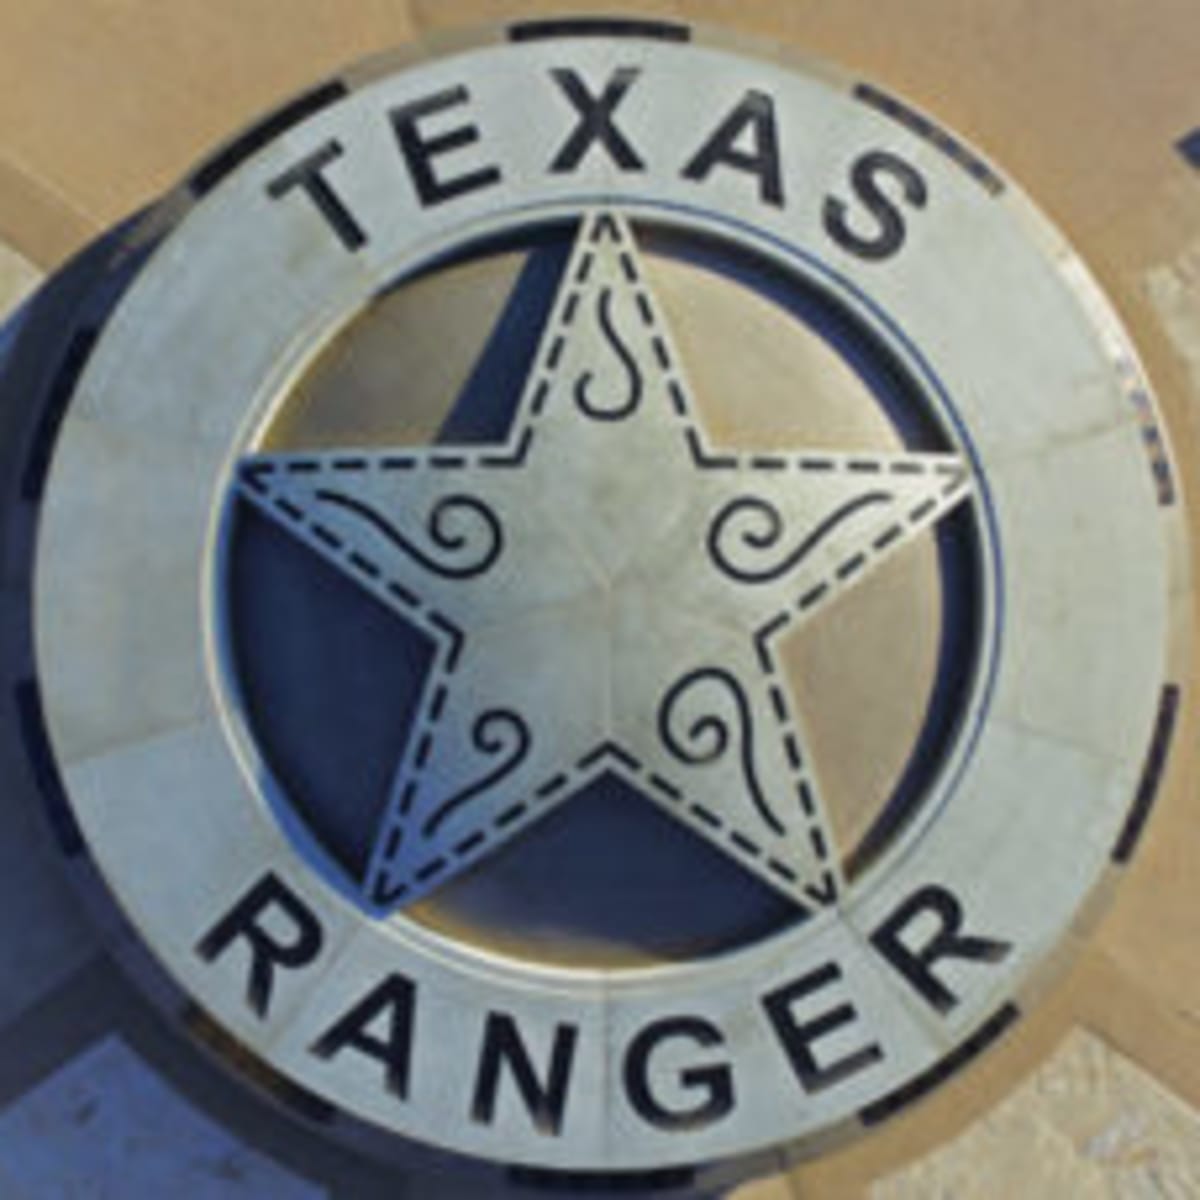 History of the Texas Ranger Badge